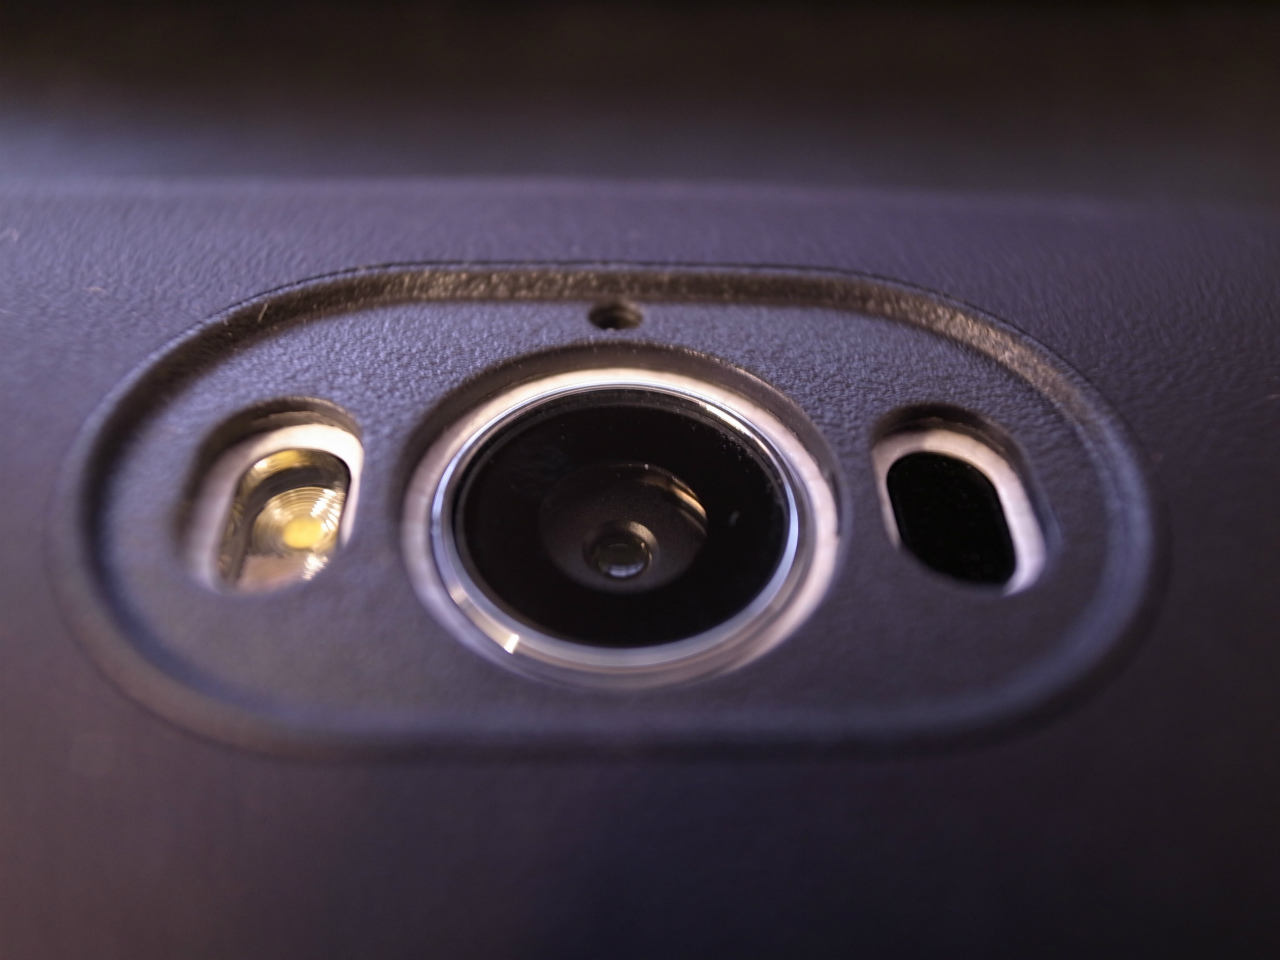 ZenFone Max VIEW FLIP CASE 本体を支えるケース部分に一枚薄い表面カバーが貼られているような感じです。段差が感じにくくなっています。